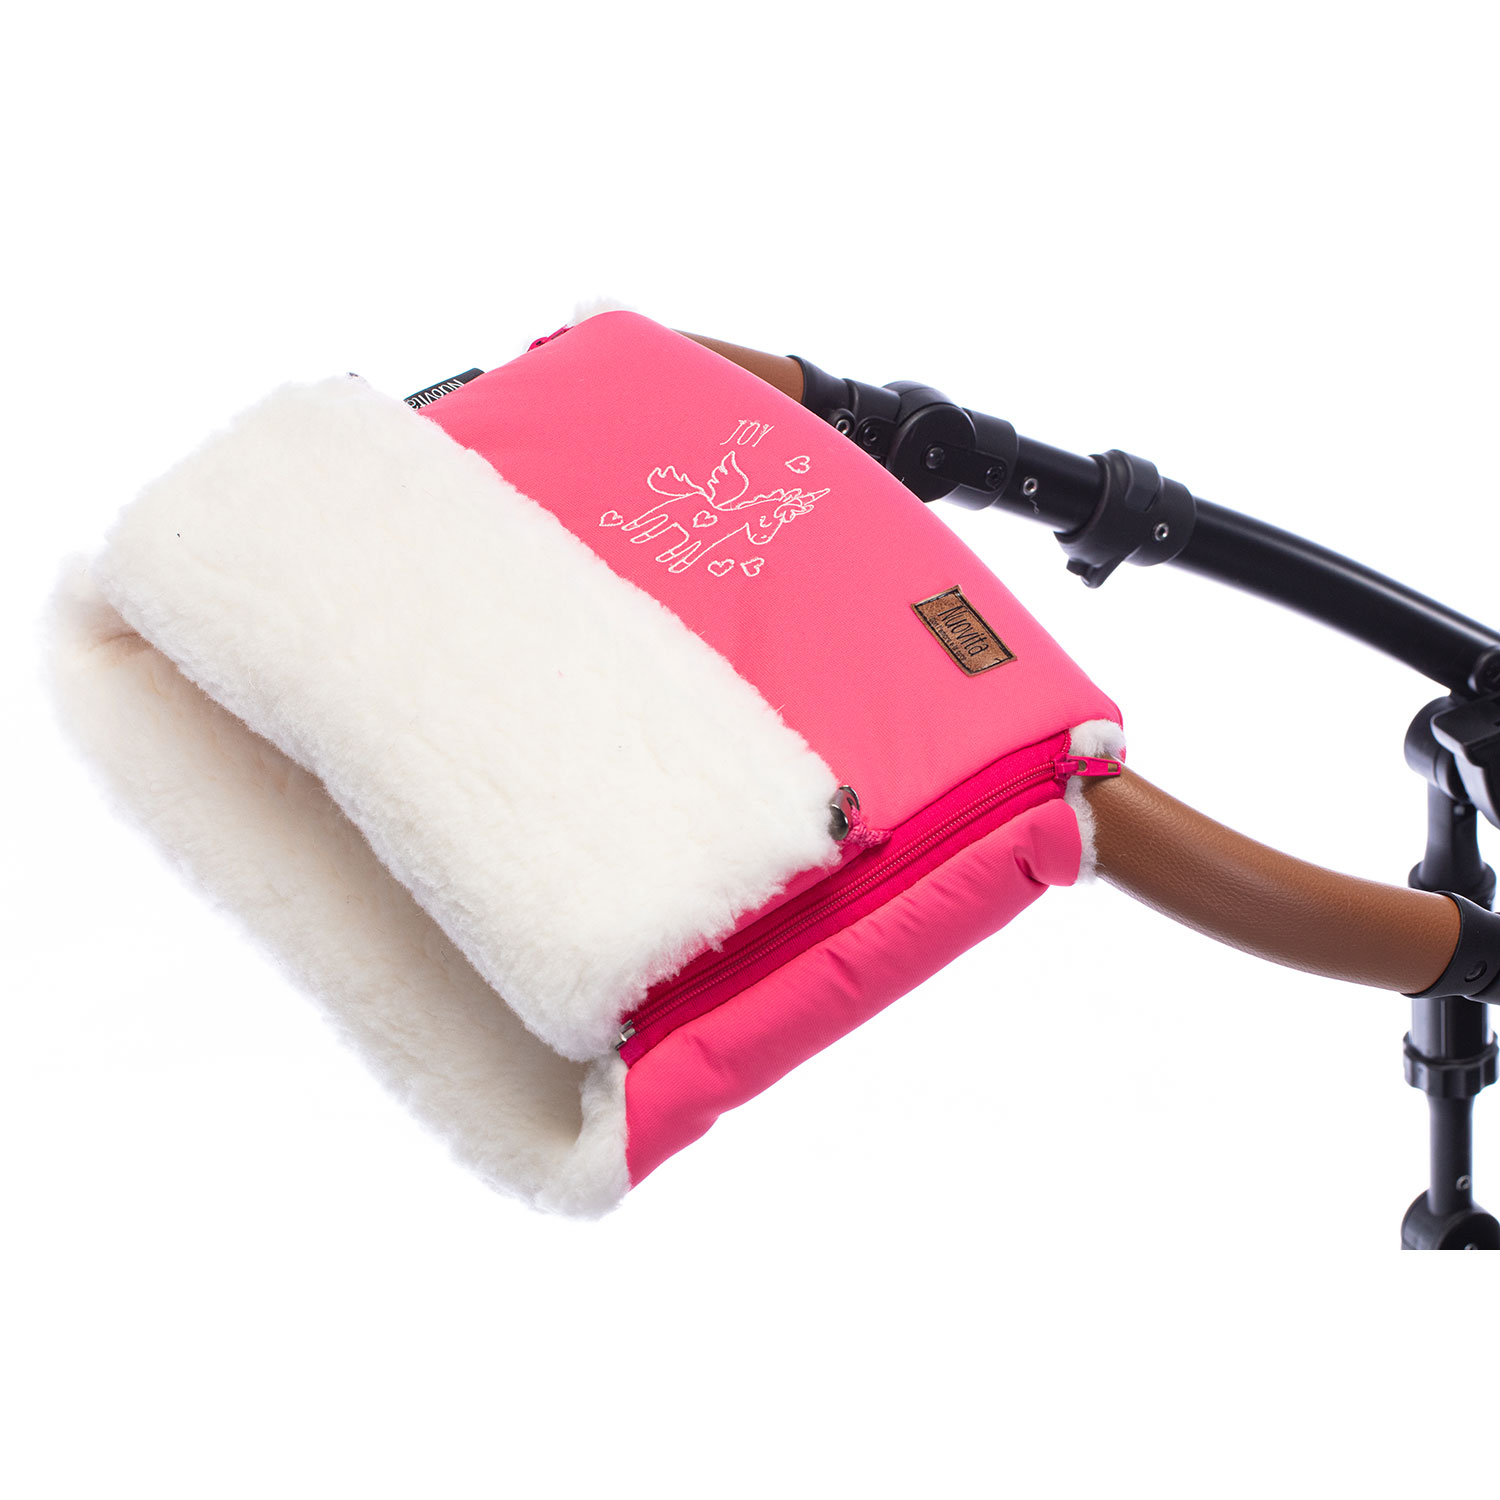 Муфта меховая для коляски Nuovita Islanda Bianco, цвет розовый муфта меховая для коляски nuovita alpino bianco белый